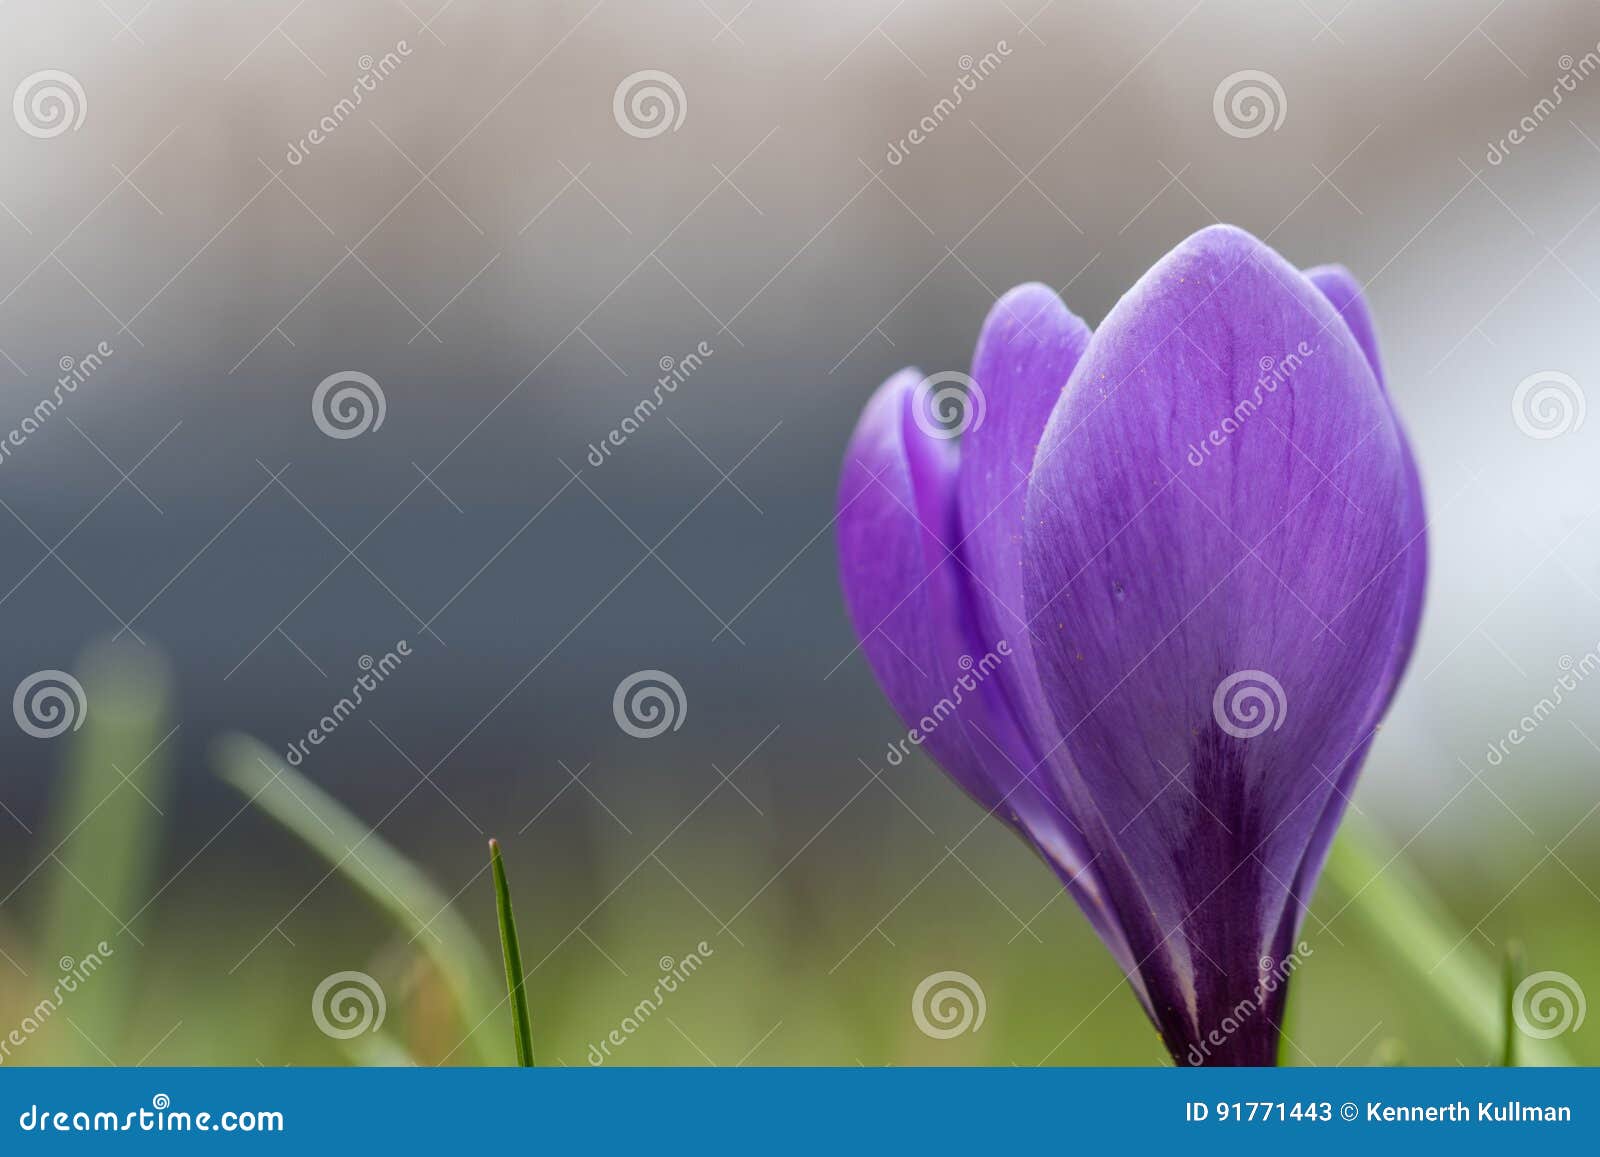 lilac crocus flower closeup